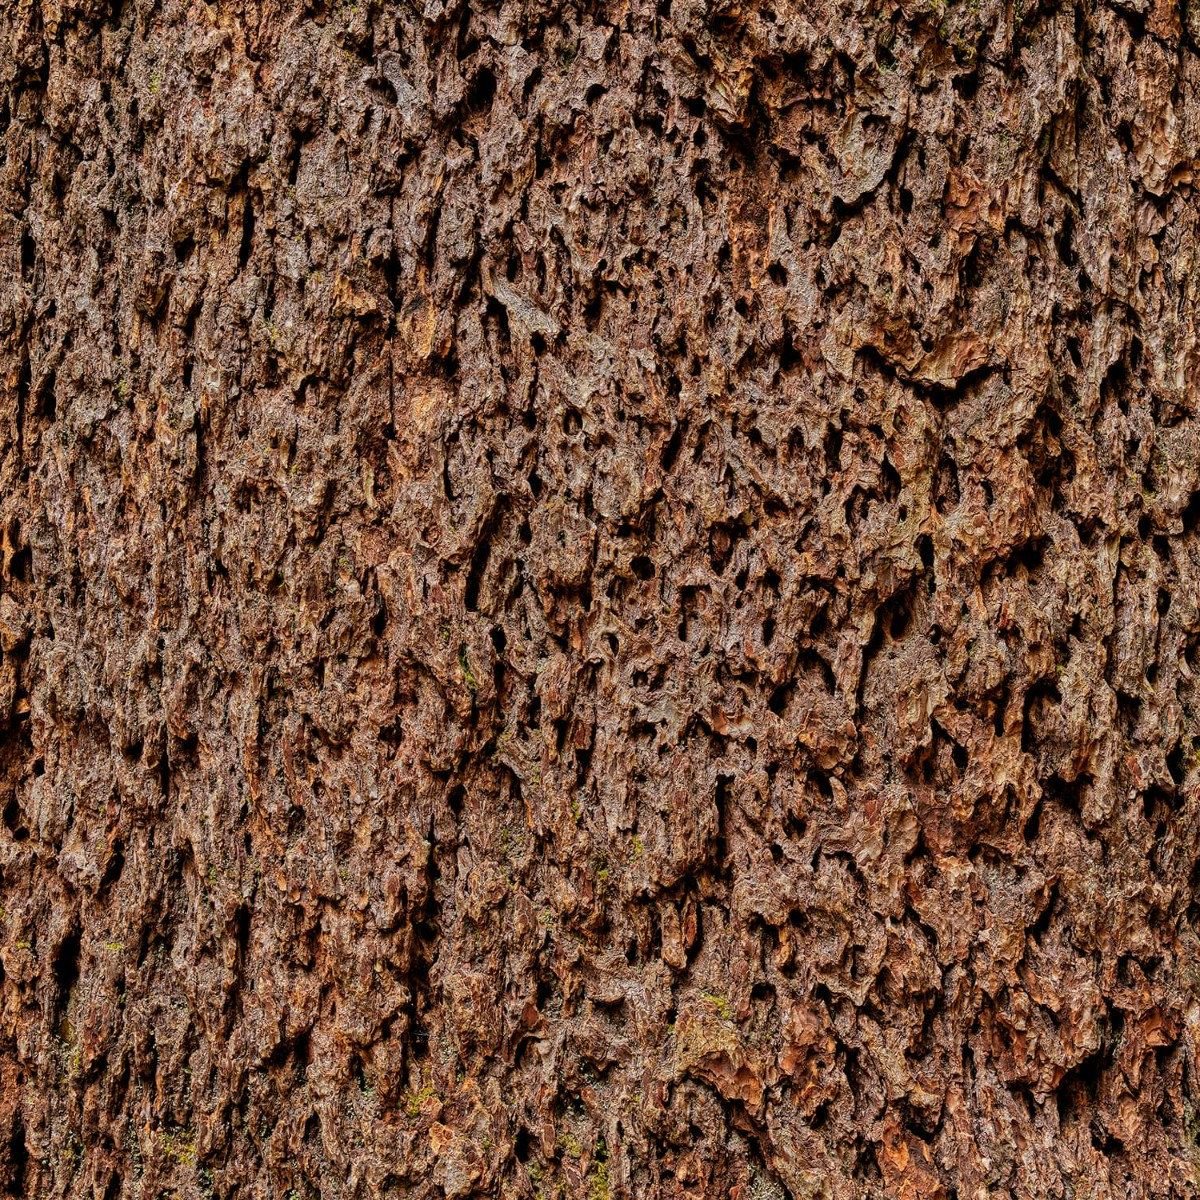 Detailed tree bark